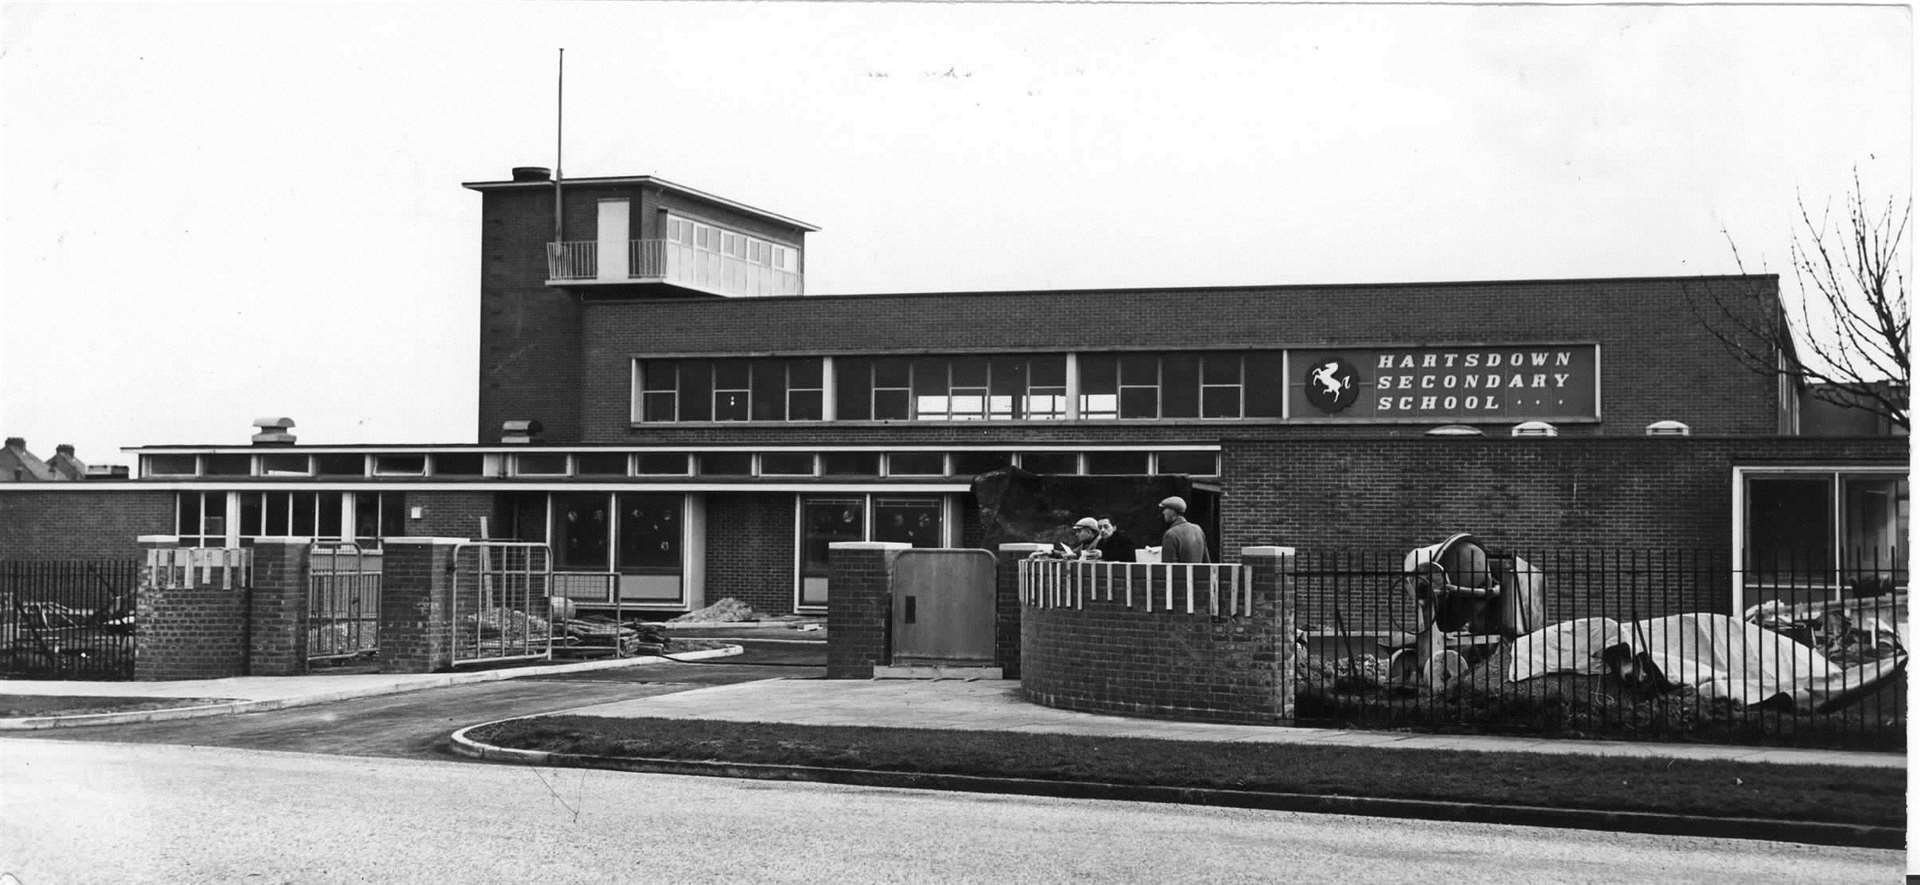 Hartsdown Secondary School, Margate, in 1958